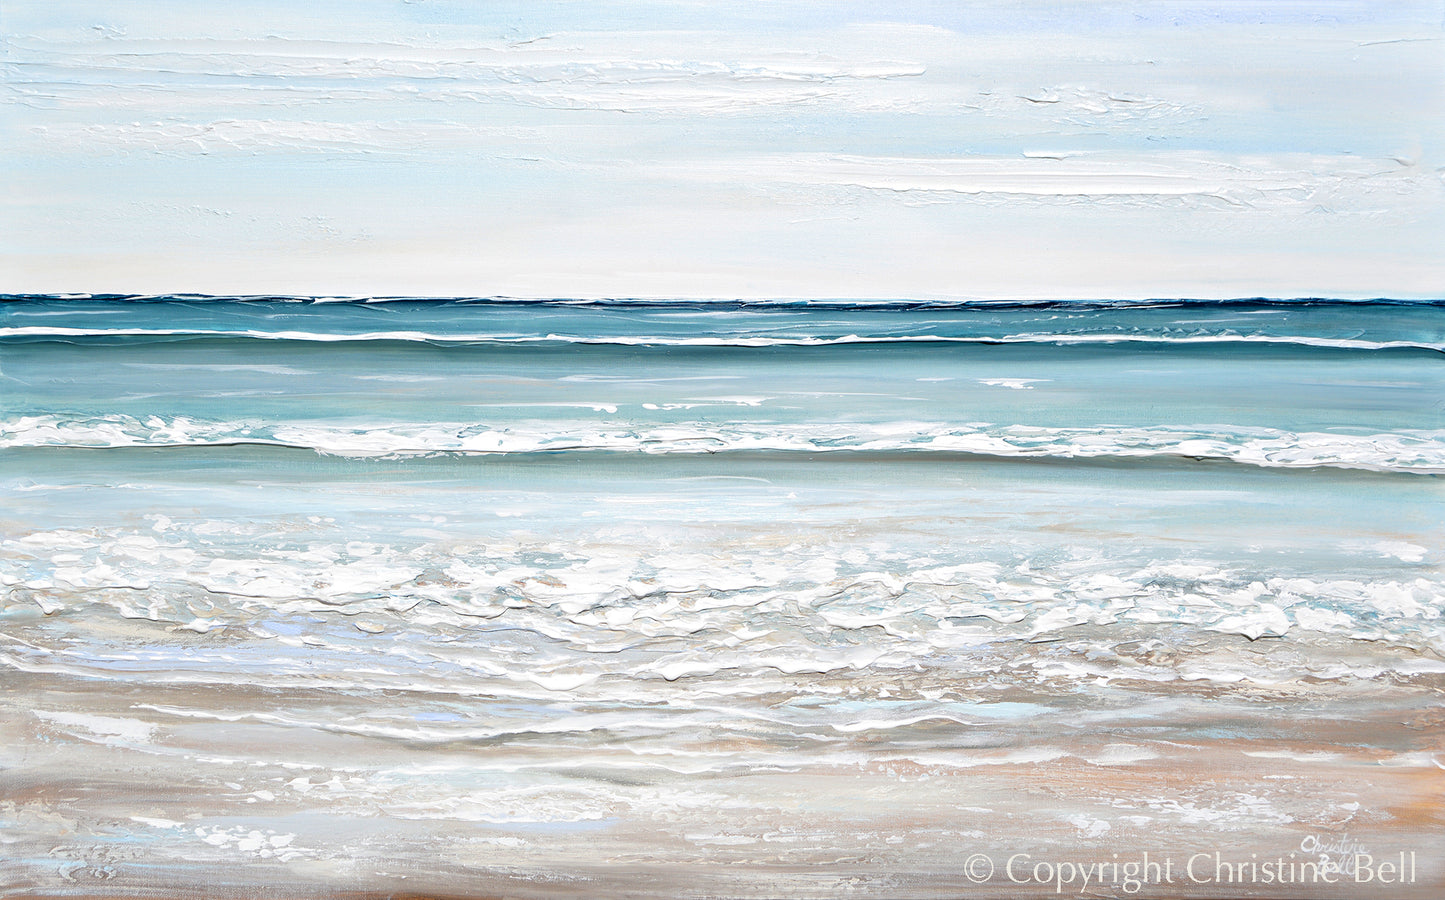 Original Art Abstract Painting Coastal Seascape Textured Blue White Ocean Beach Wall Decor